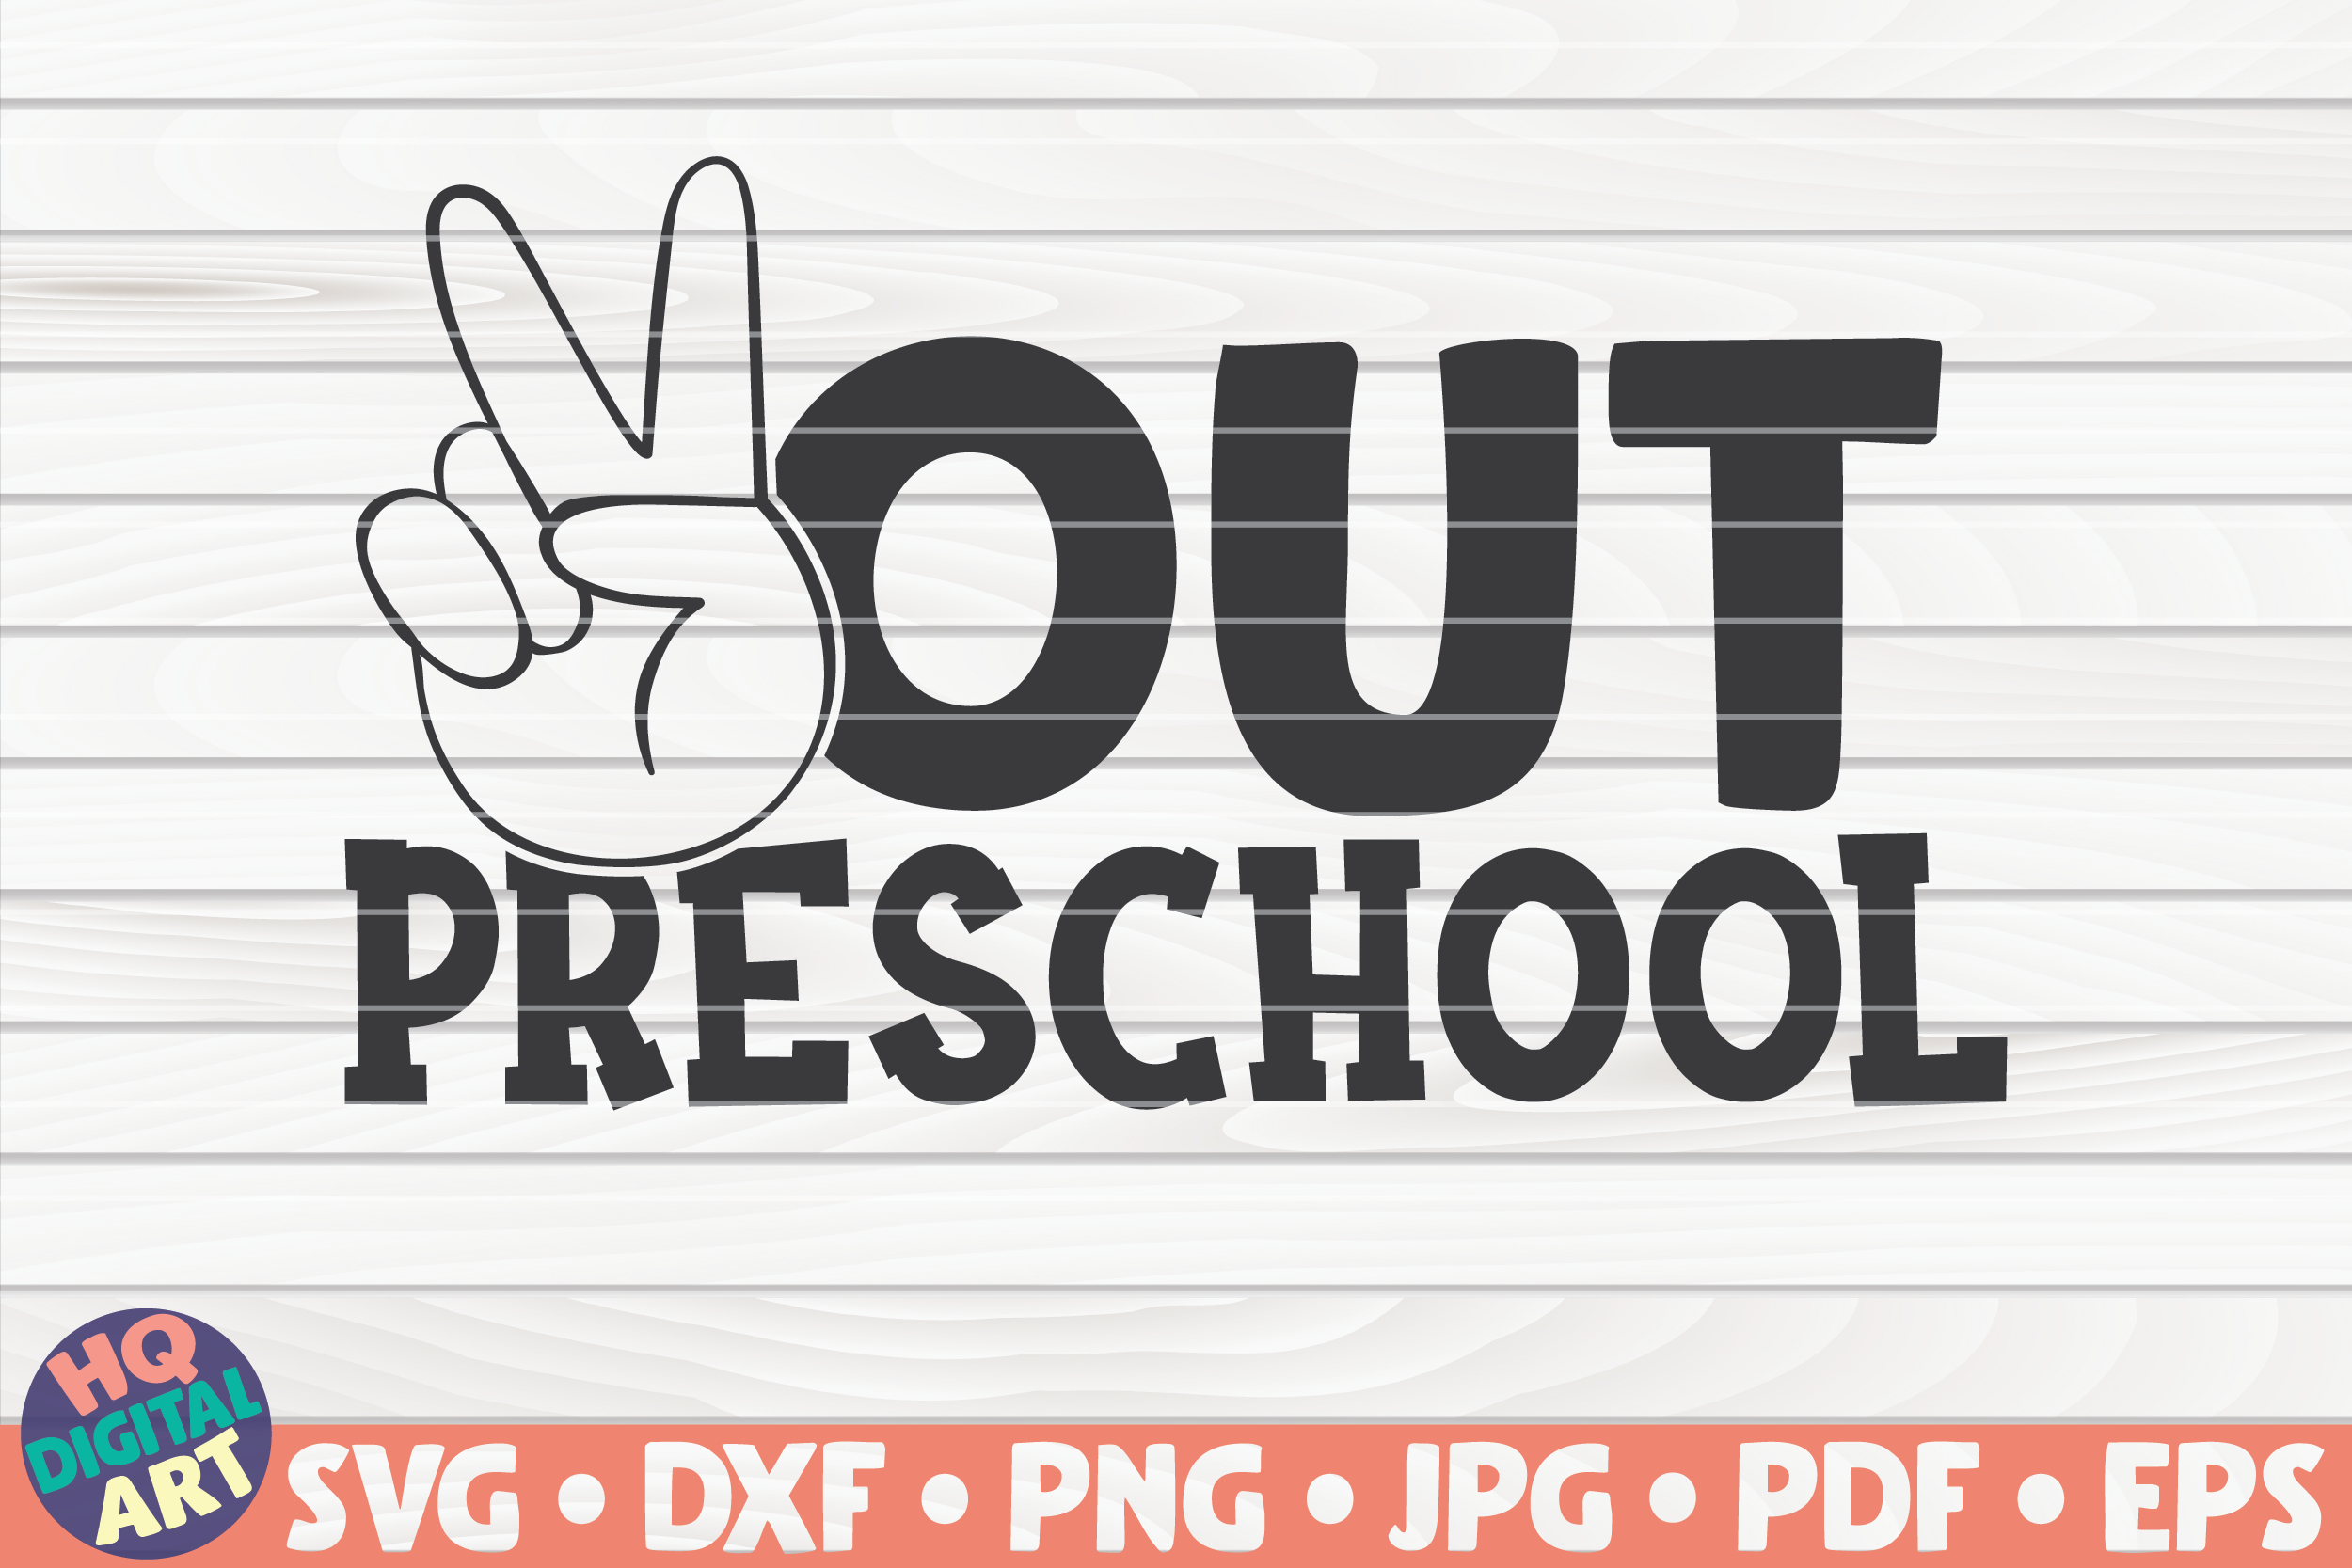 Peace Out Preschool Svg By Hqdigitalart Thehungryjpeg Com